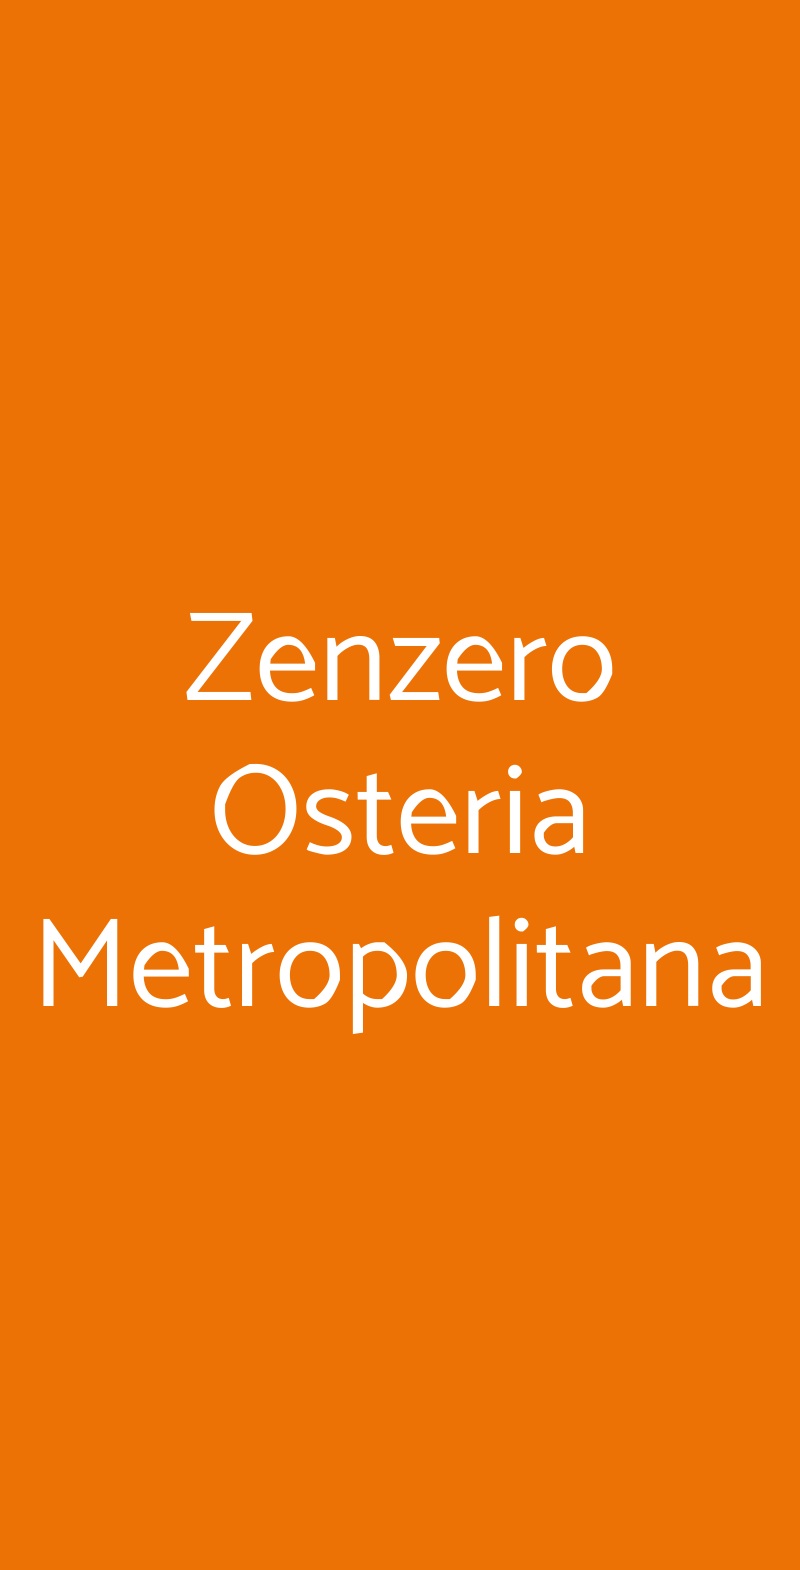 Zenzero Osteria Metropolitana Guidonia Montecelio menù 1 pagina